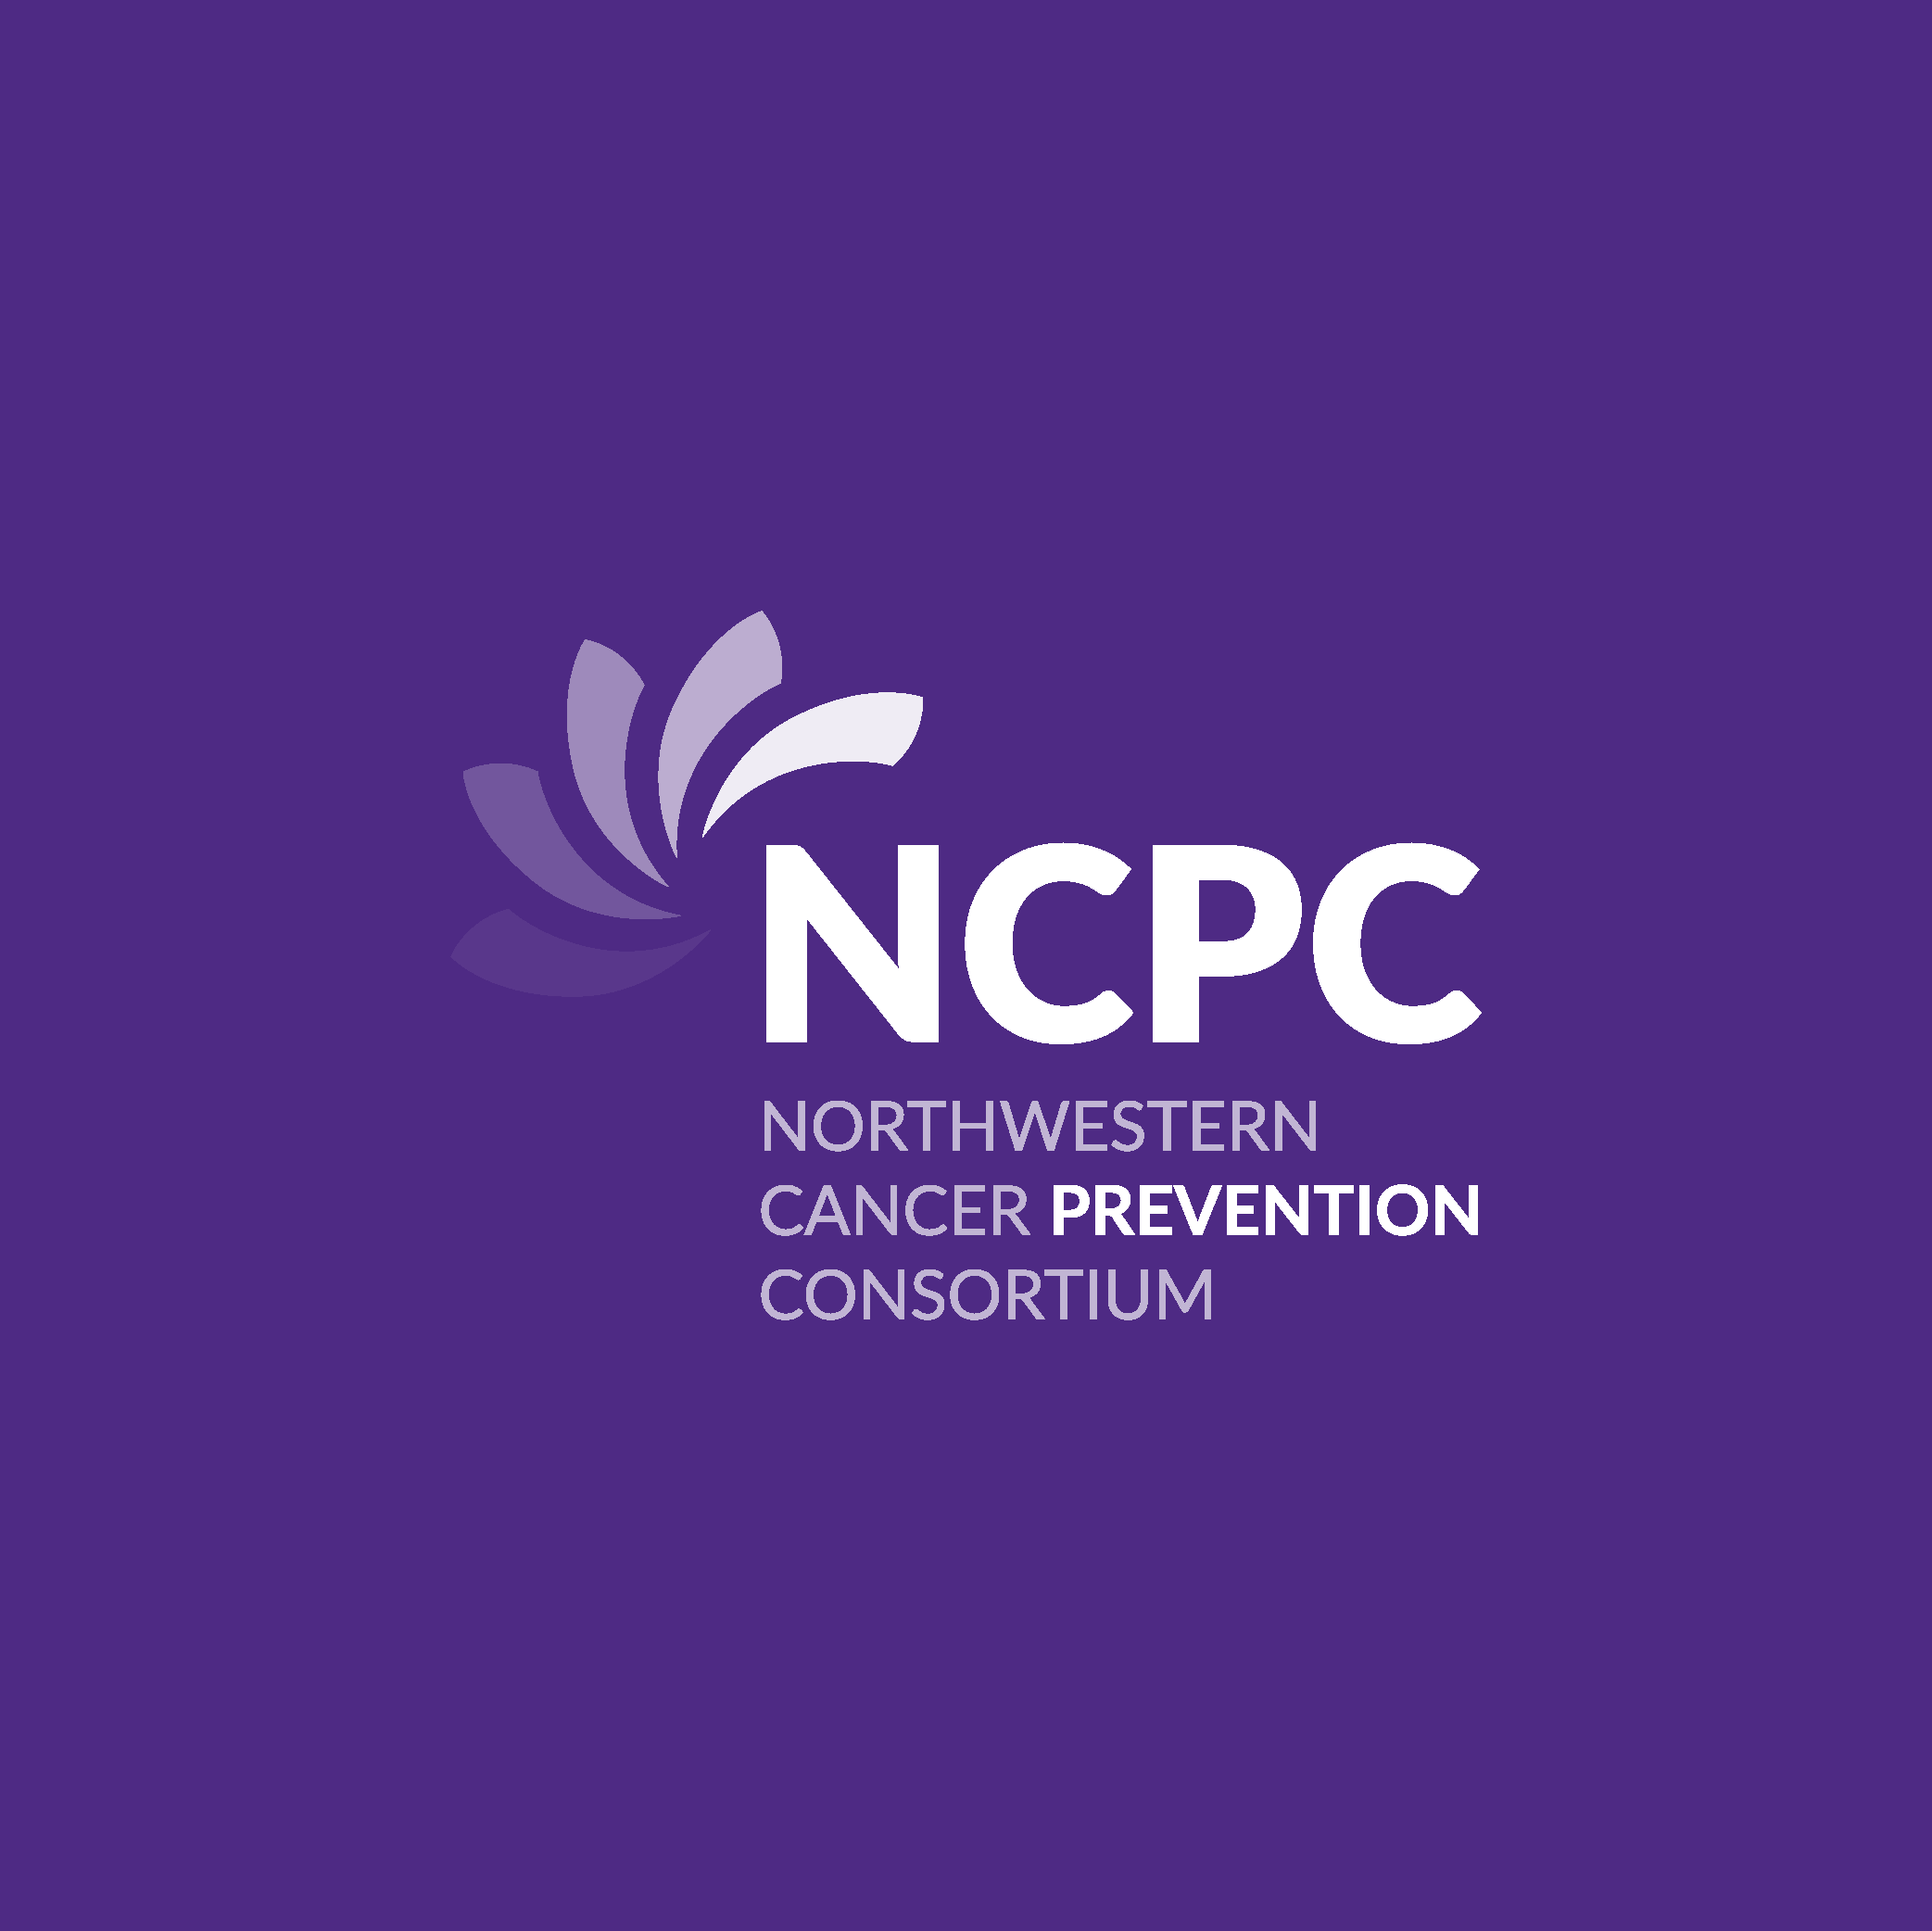 NCPC Northwestern Cancer Prevention Consortium